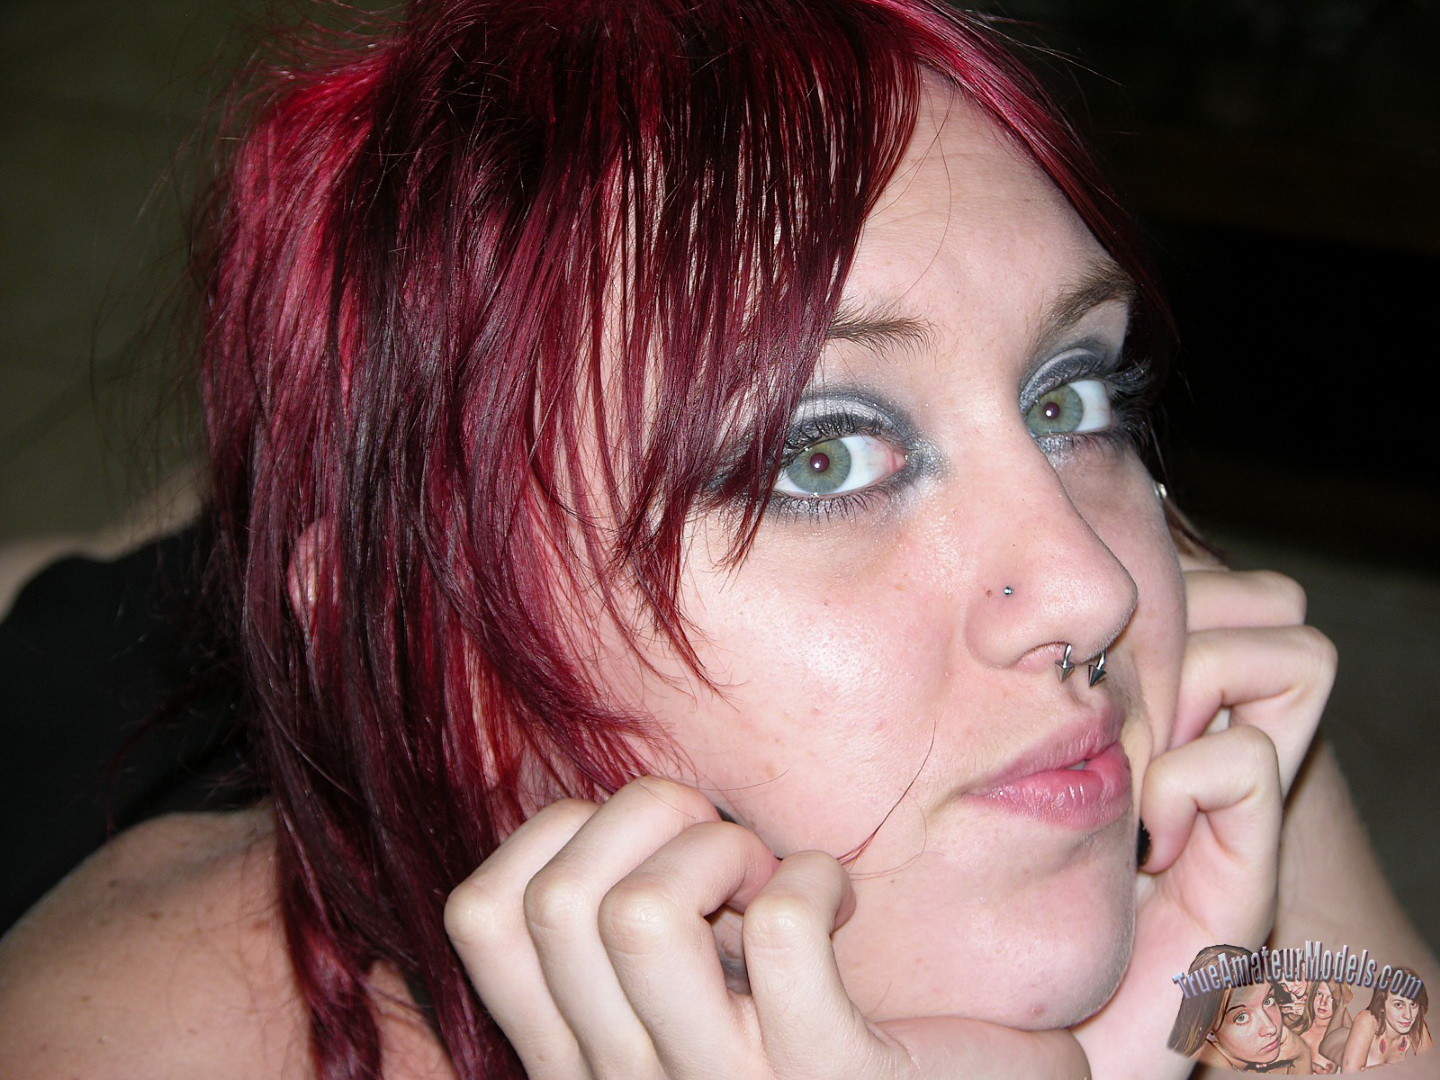 Metalhead girl modèle nu et étalage de cul punk rock
 #67299809